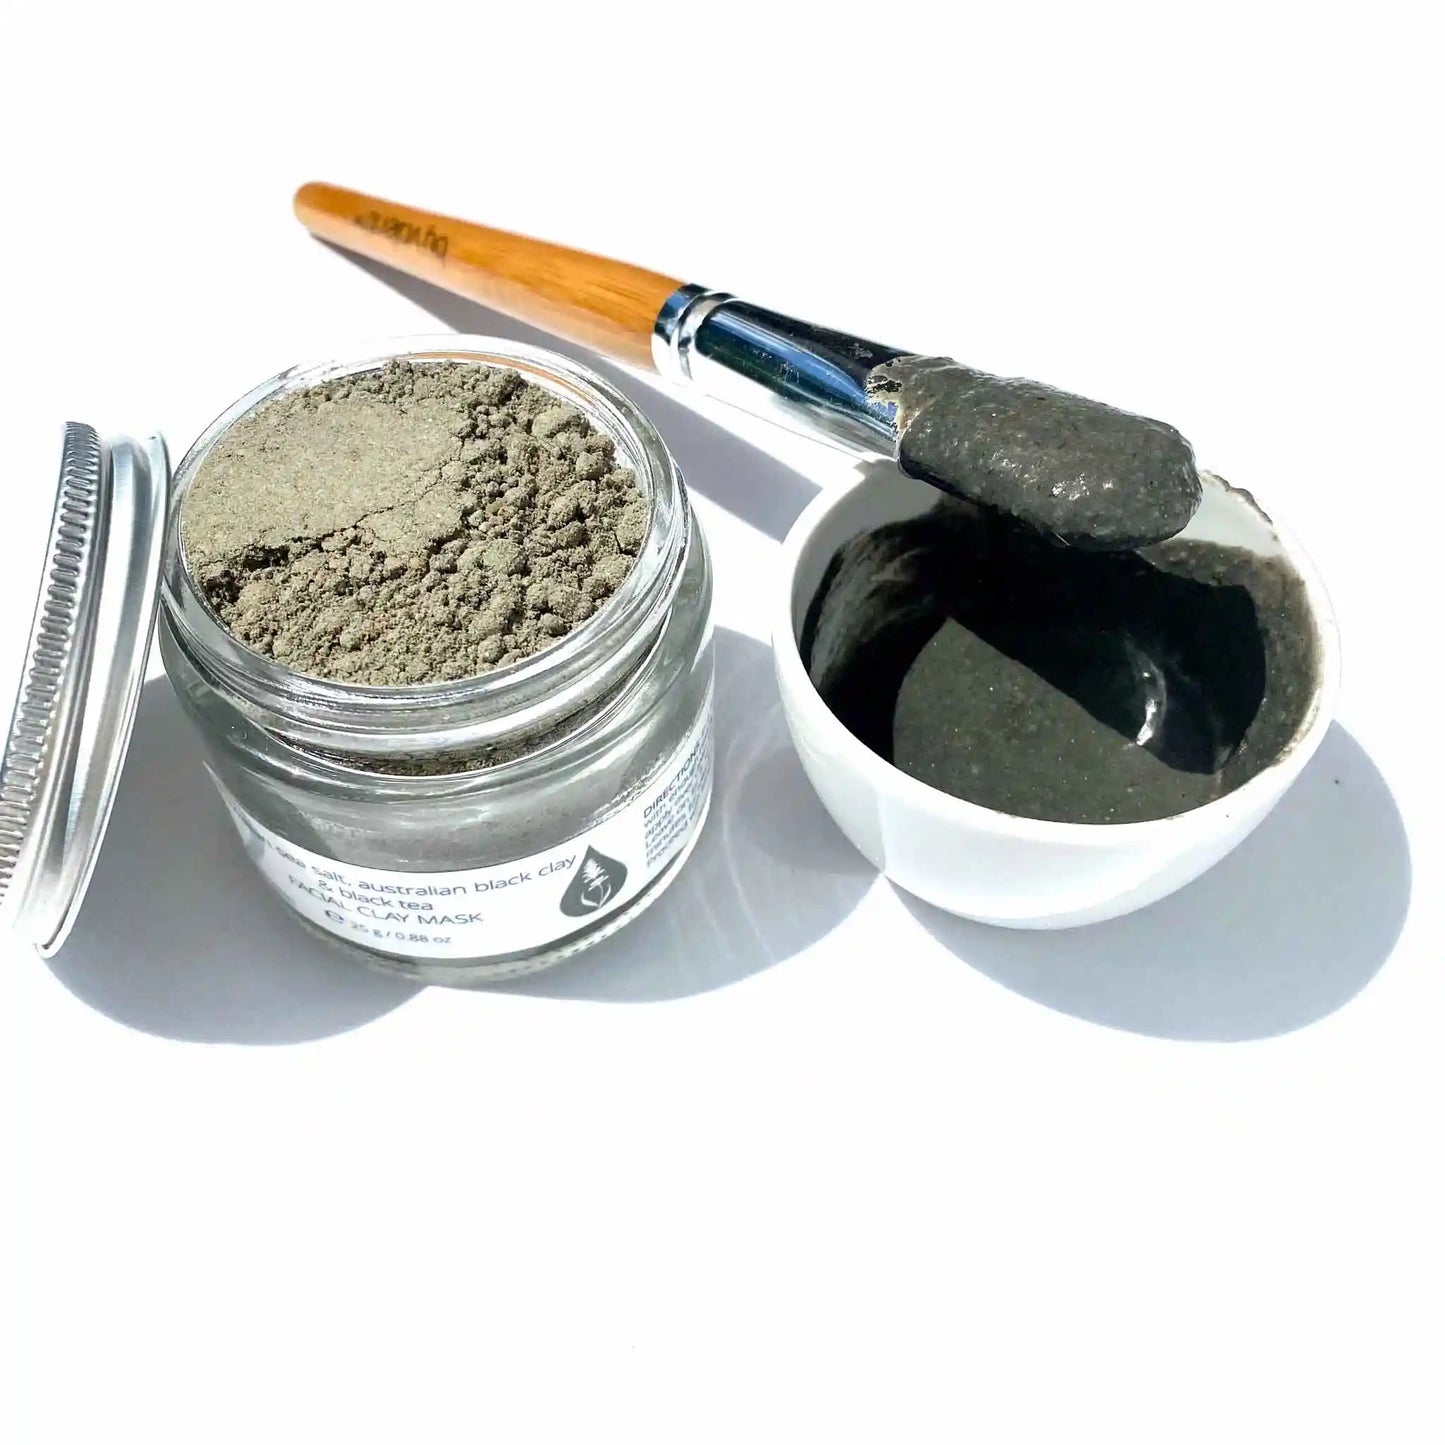 Skin Purifying By Valenti Organics Hawaiian Sea Salt, Australian Black Clay & Black Tea Natural Skincare Facial Clay Mask